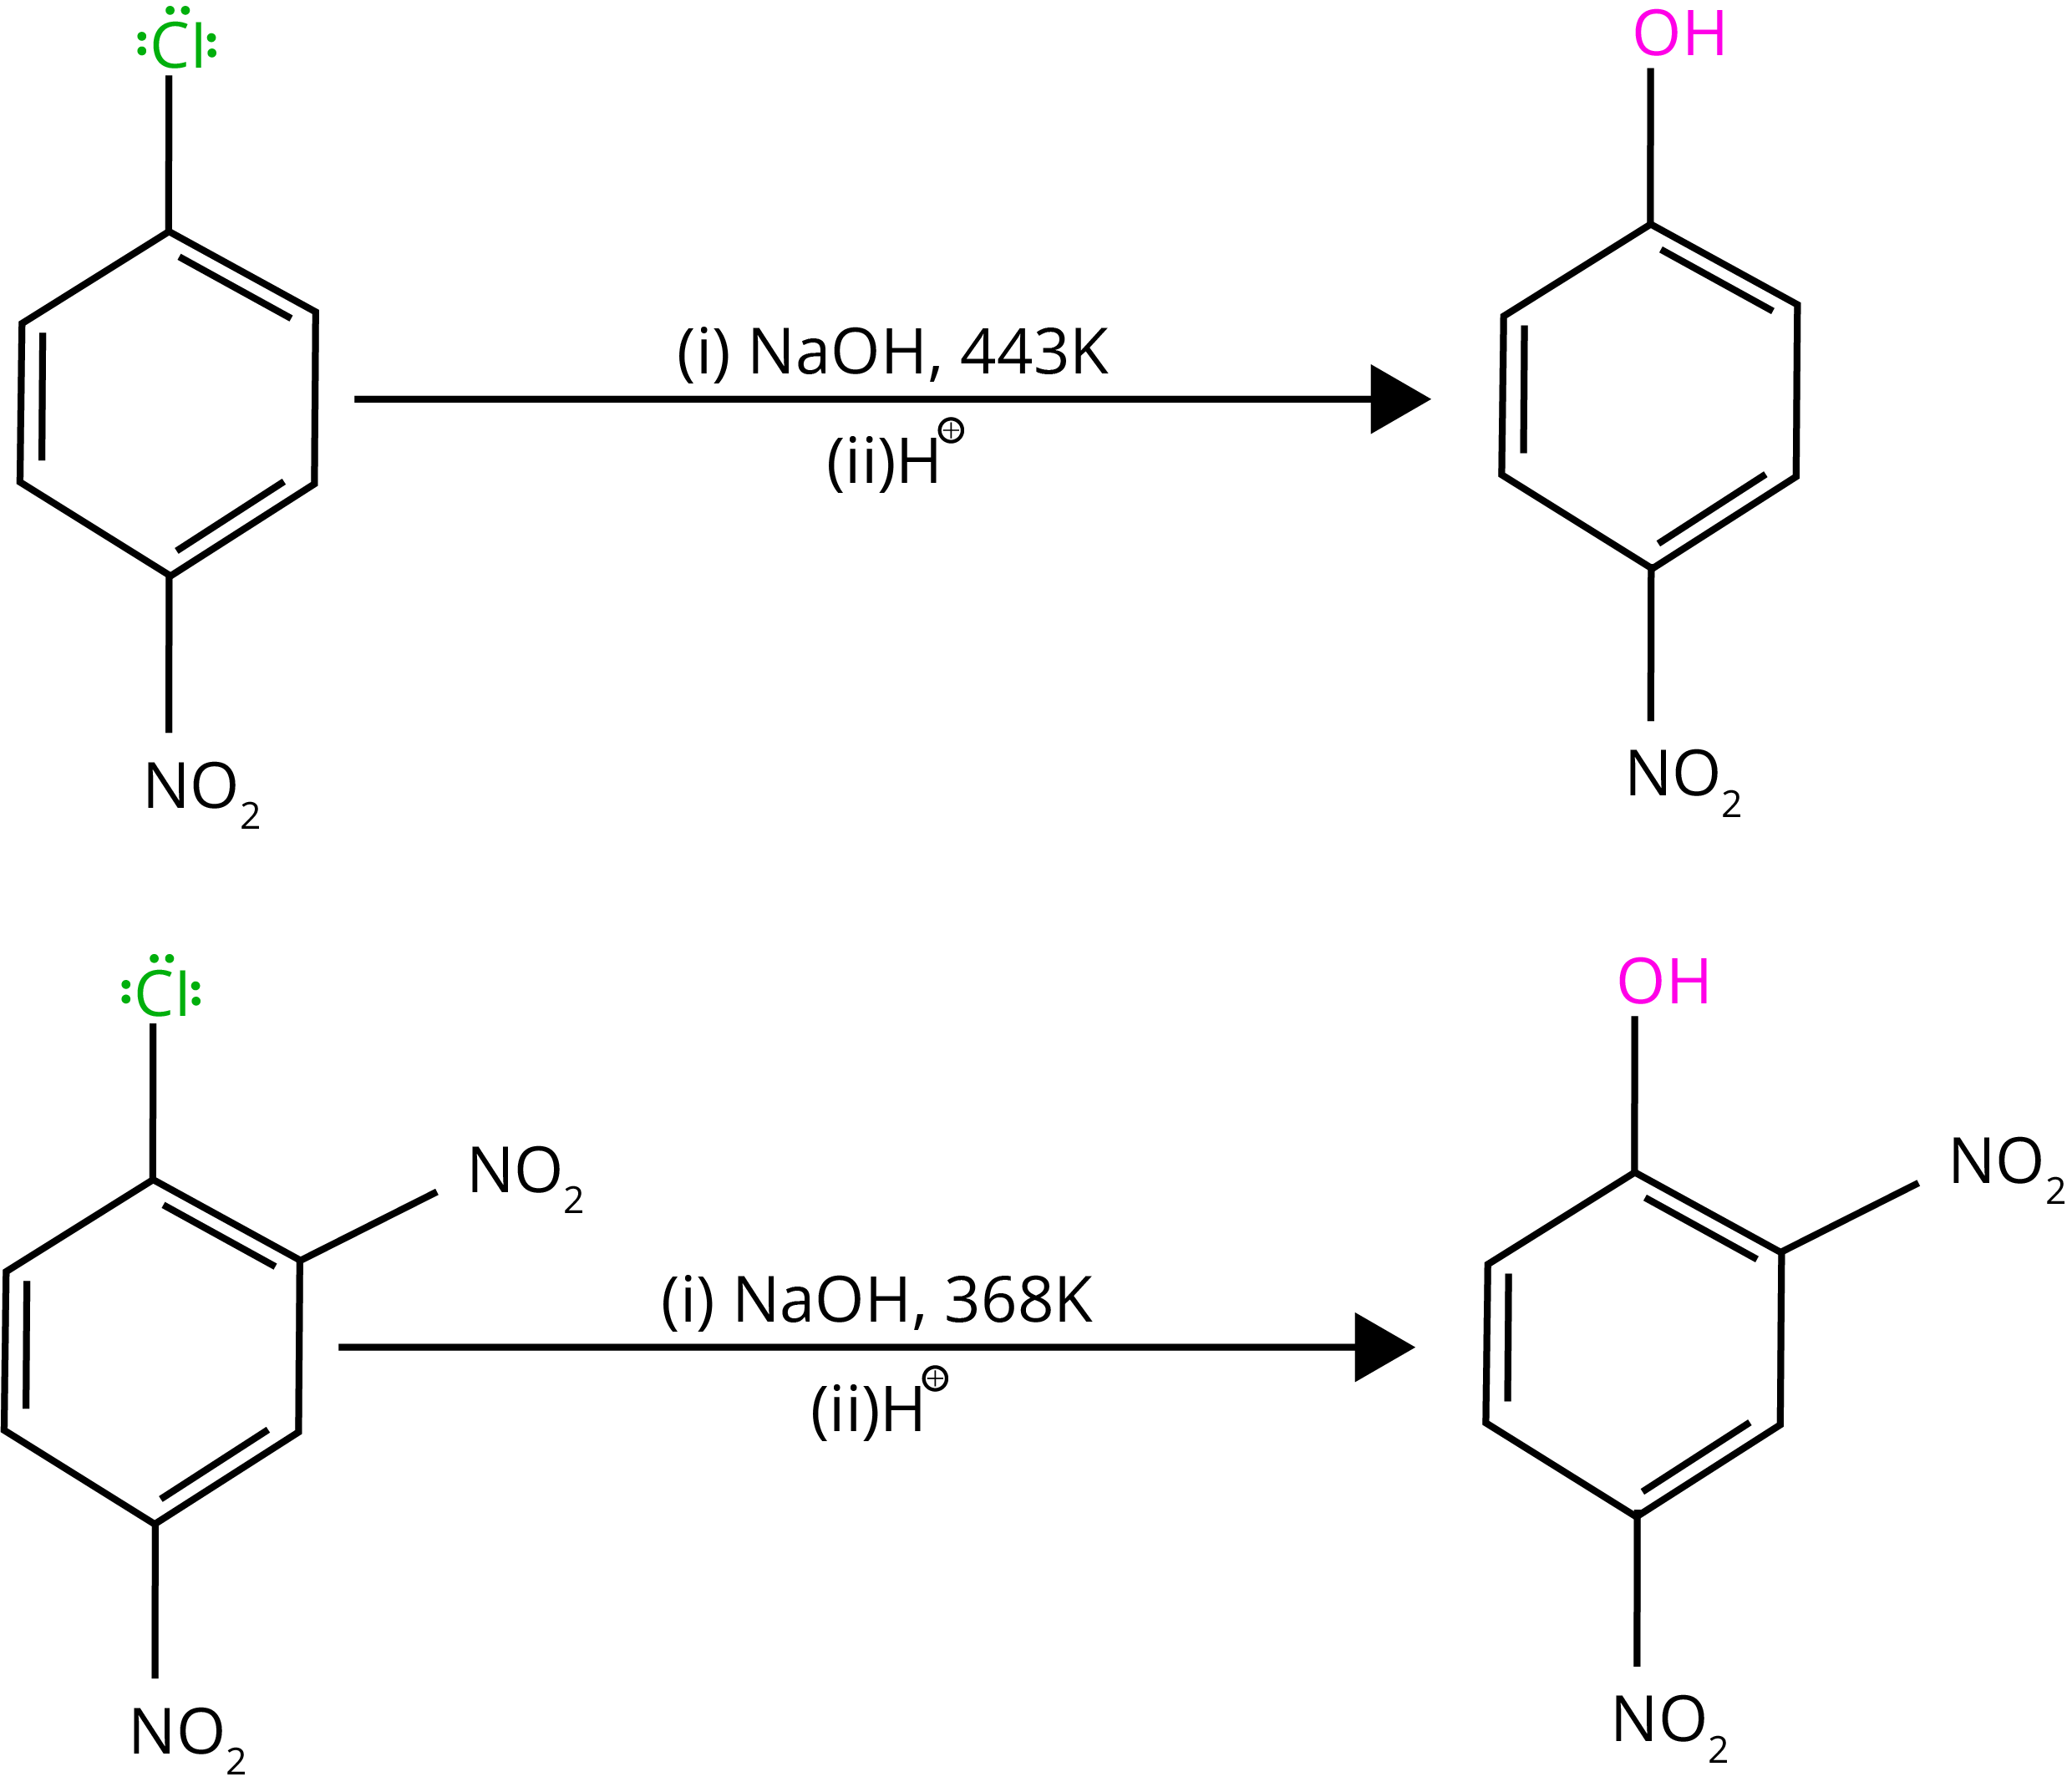 Substitution reaction in haloarenes